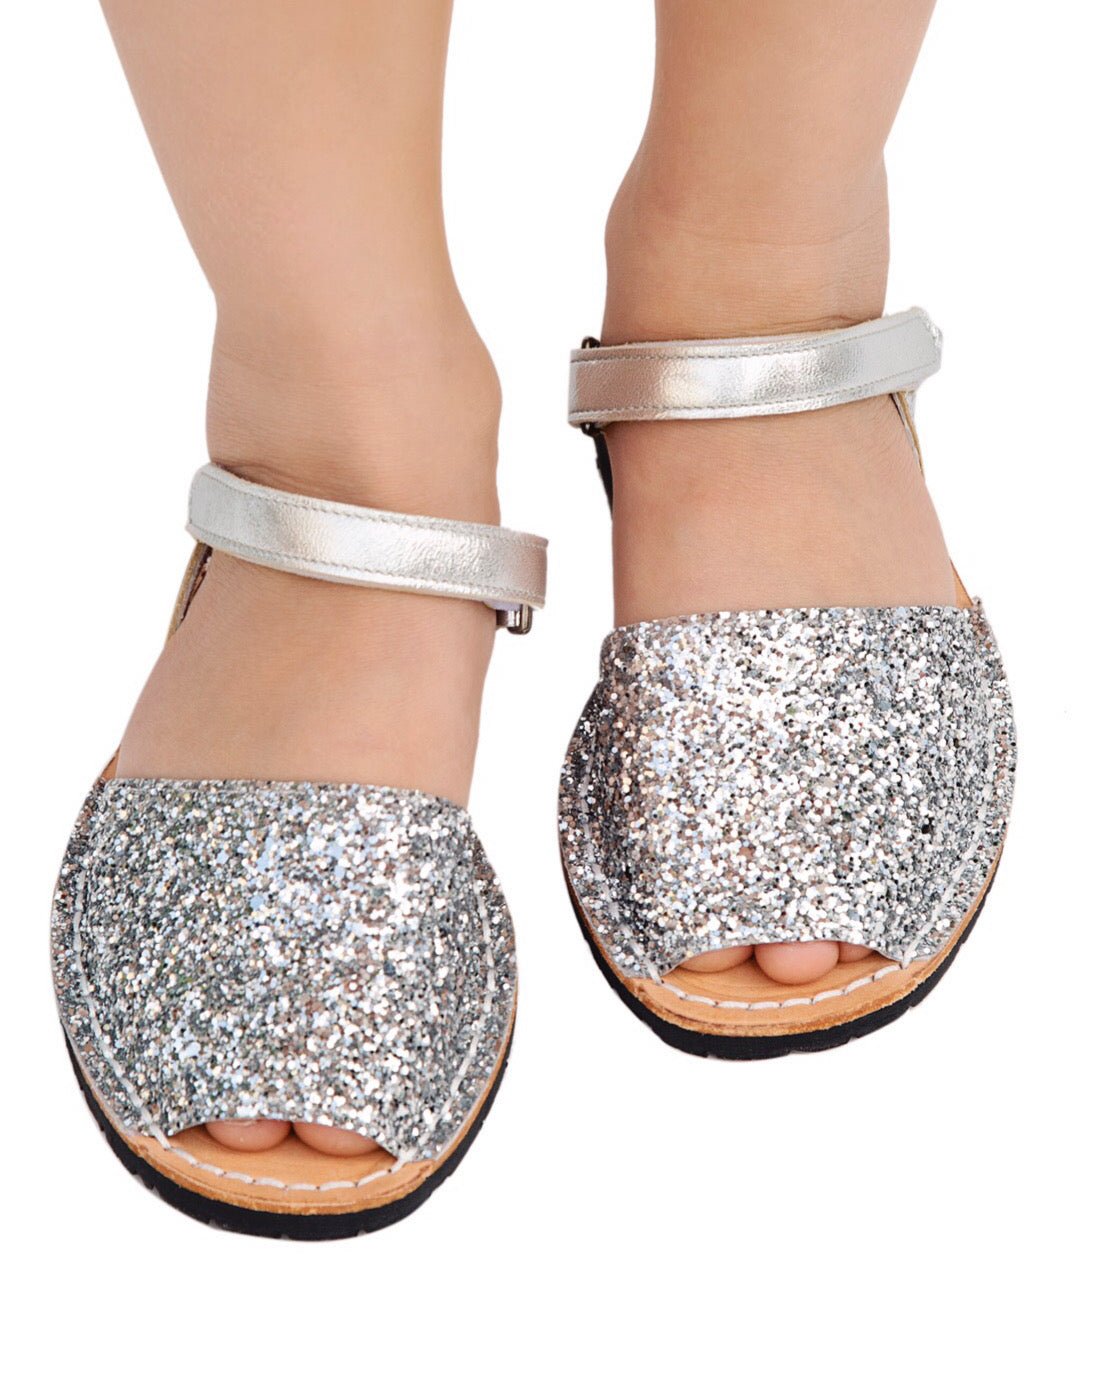 Girls Ankle Strap Avarca in Silver Glitter - Shoeq